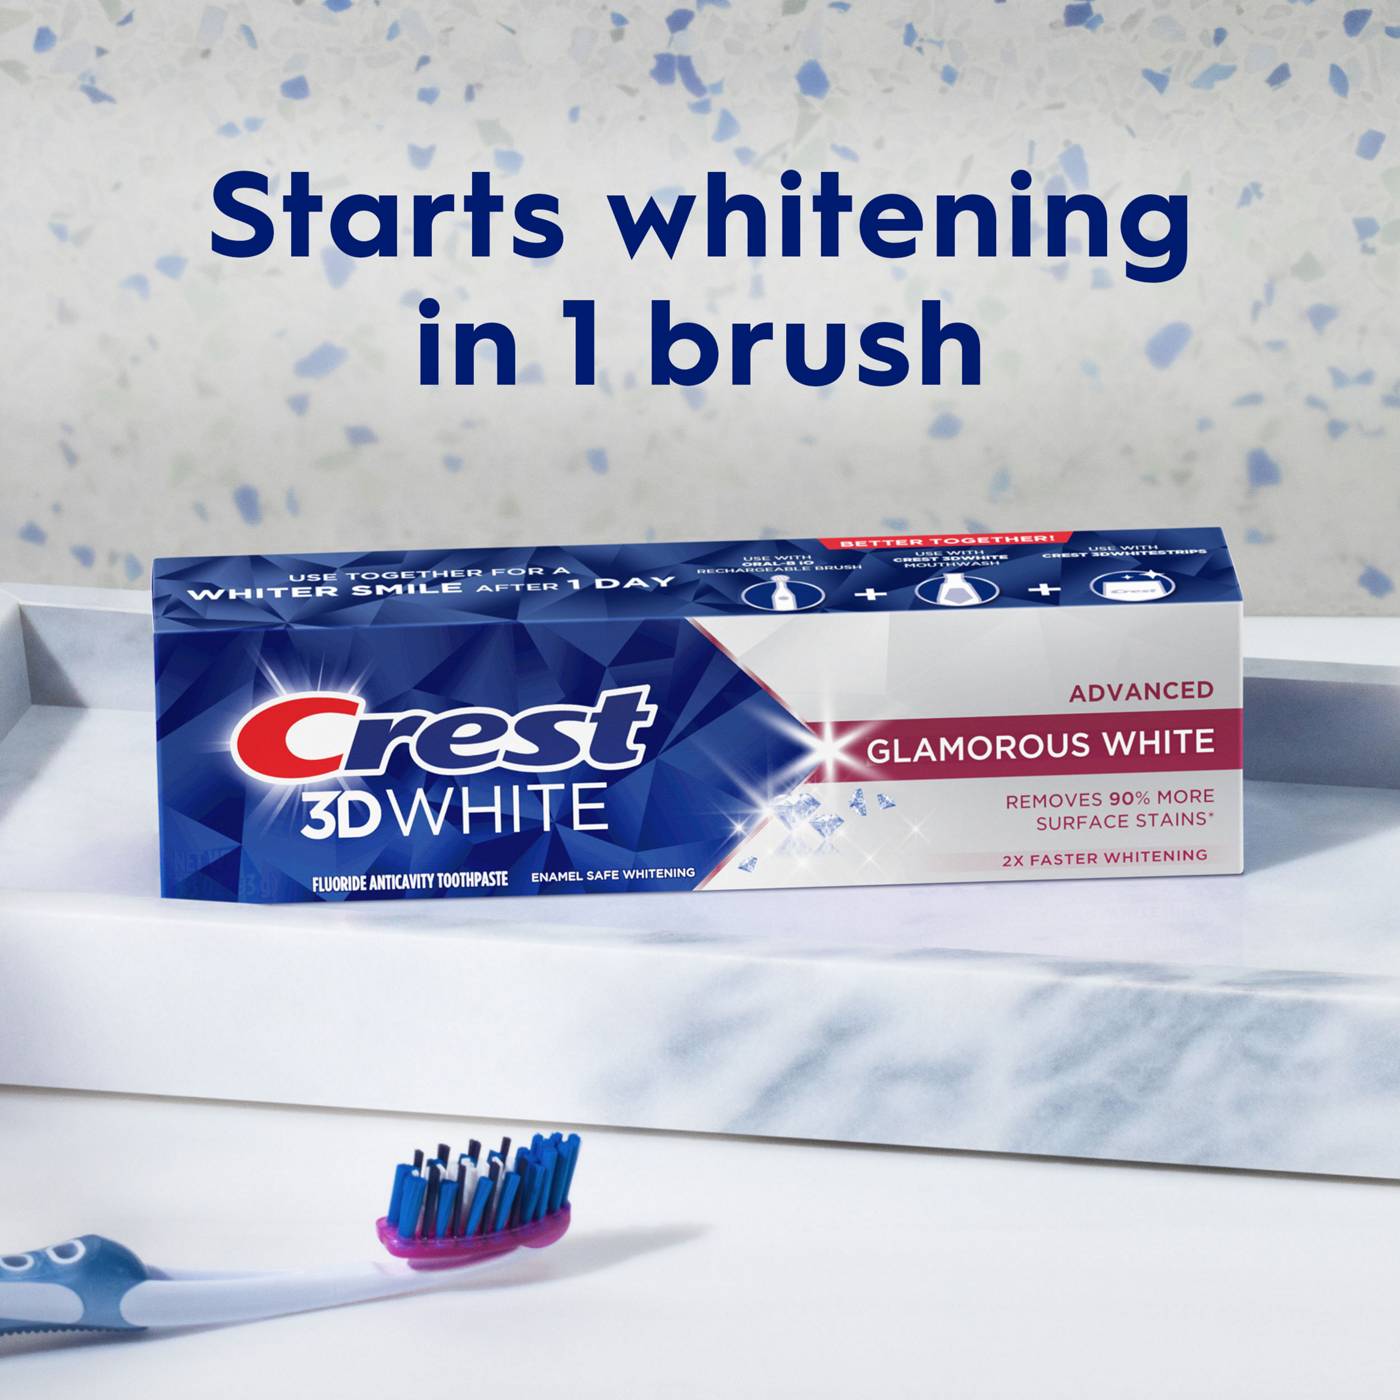 Crest 3D White Advanced Toothpaste - Glamorous White; image 6 of 8